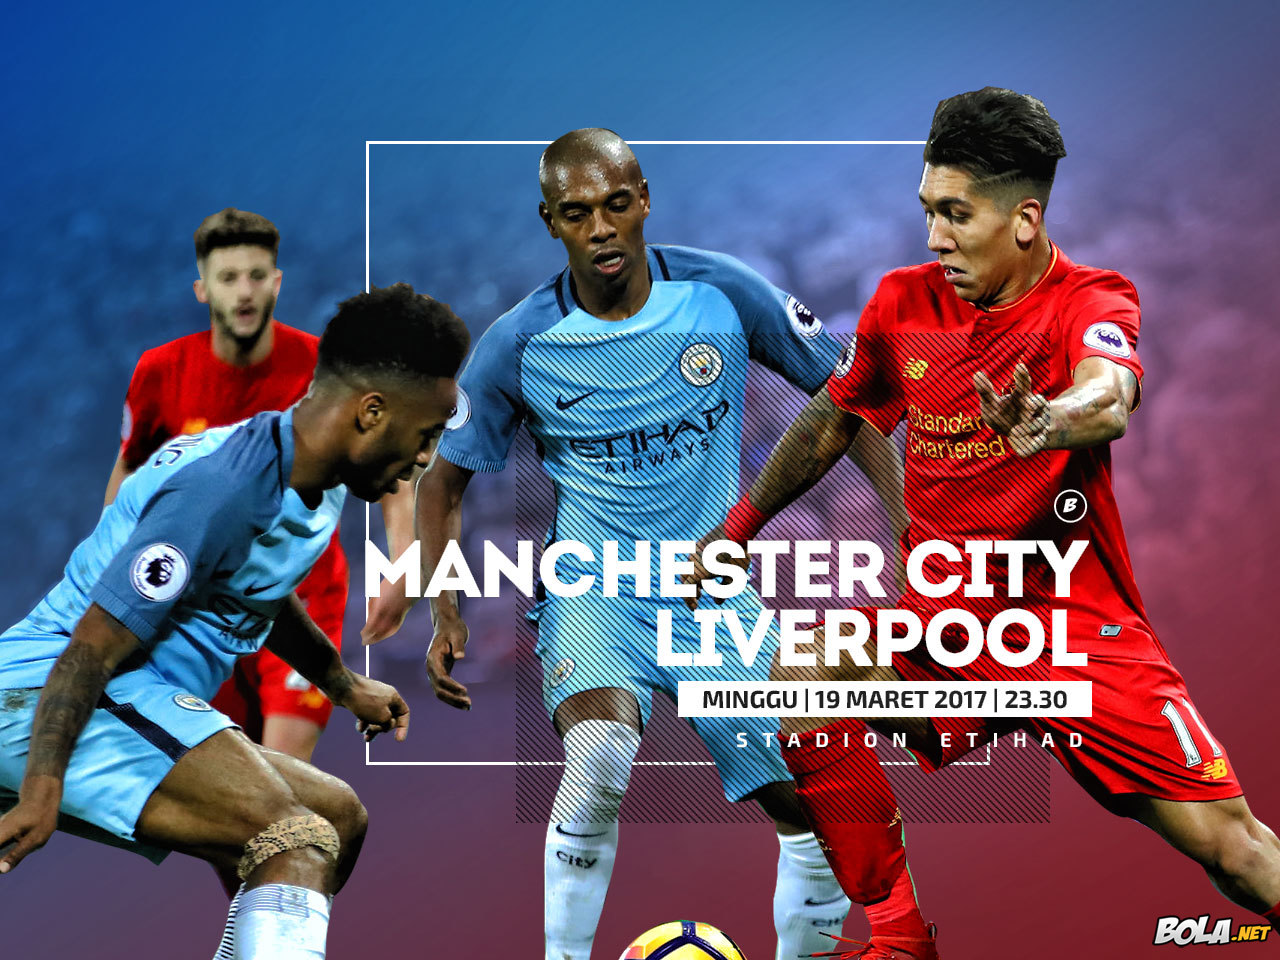 Deskripsi : Wallpaper Manchester City Vs Liverpool, size: 1280x960